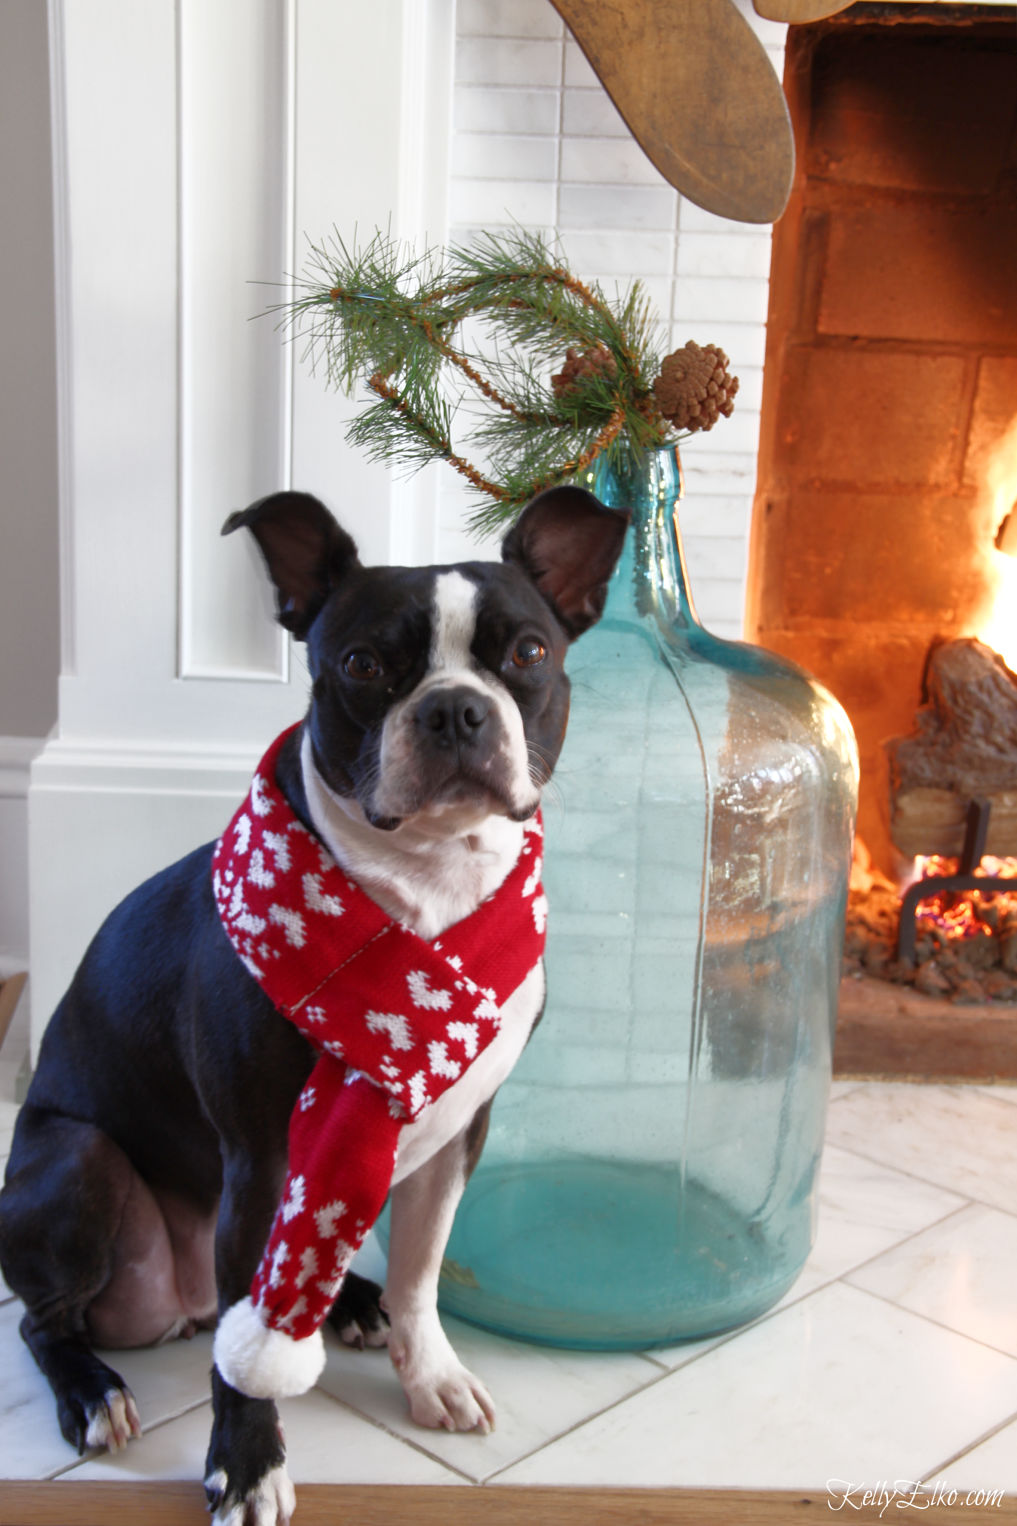 Love this cute Boston Terrier in a winter scarf kellyelko.com #christmasdog #christmasdecor #bostonterrier #vintagechristmas #farmhousechristmas